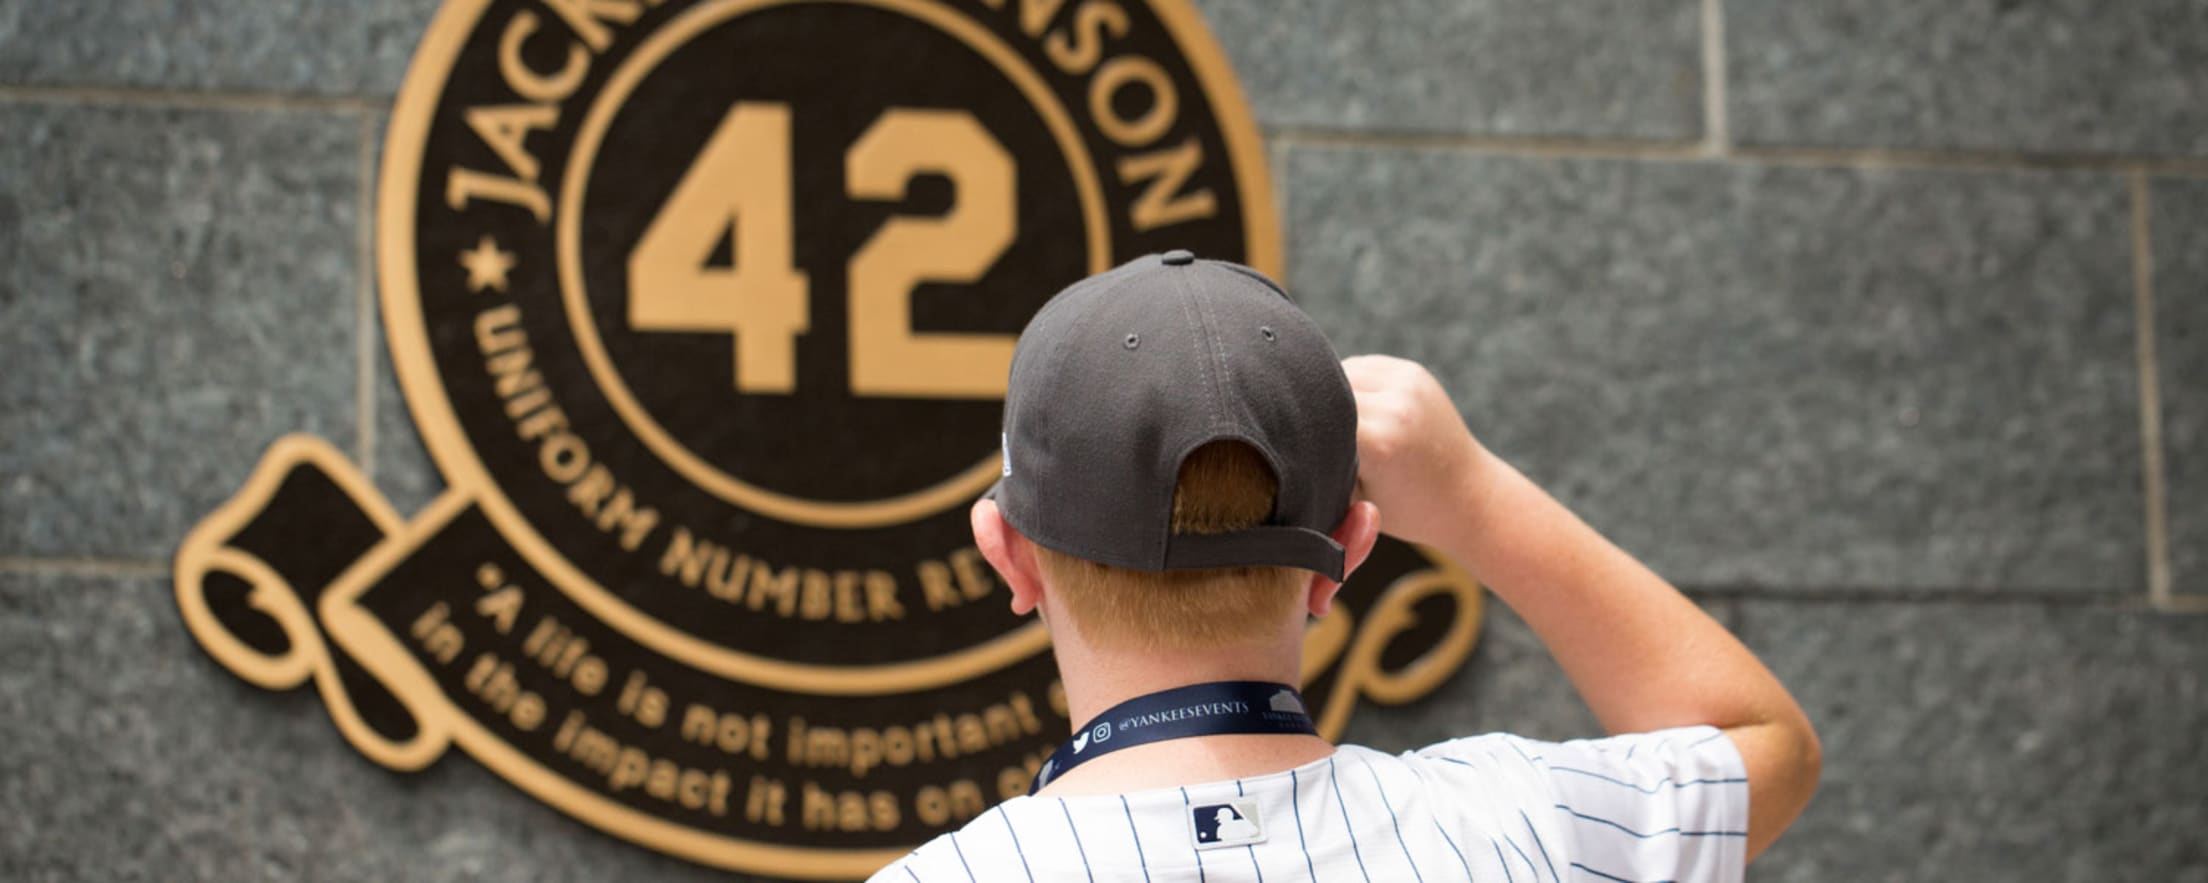 New York Yankees Baseball, Tickets, Tours & More, NYCgo